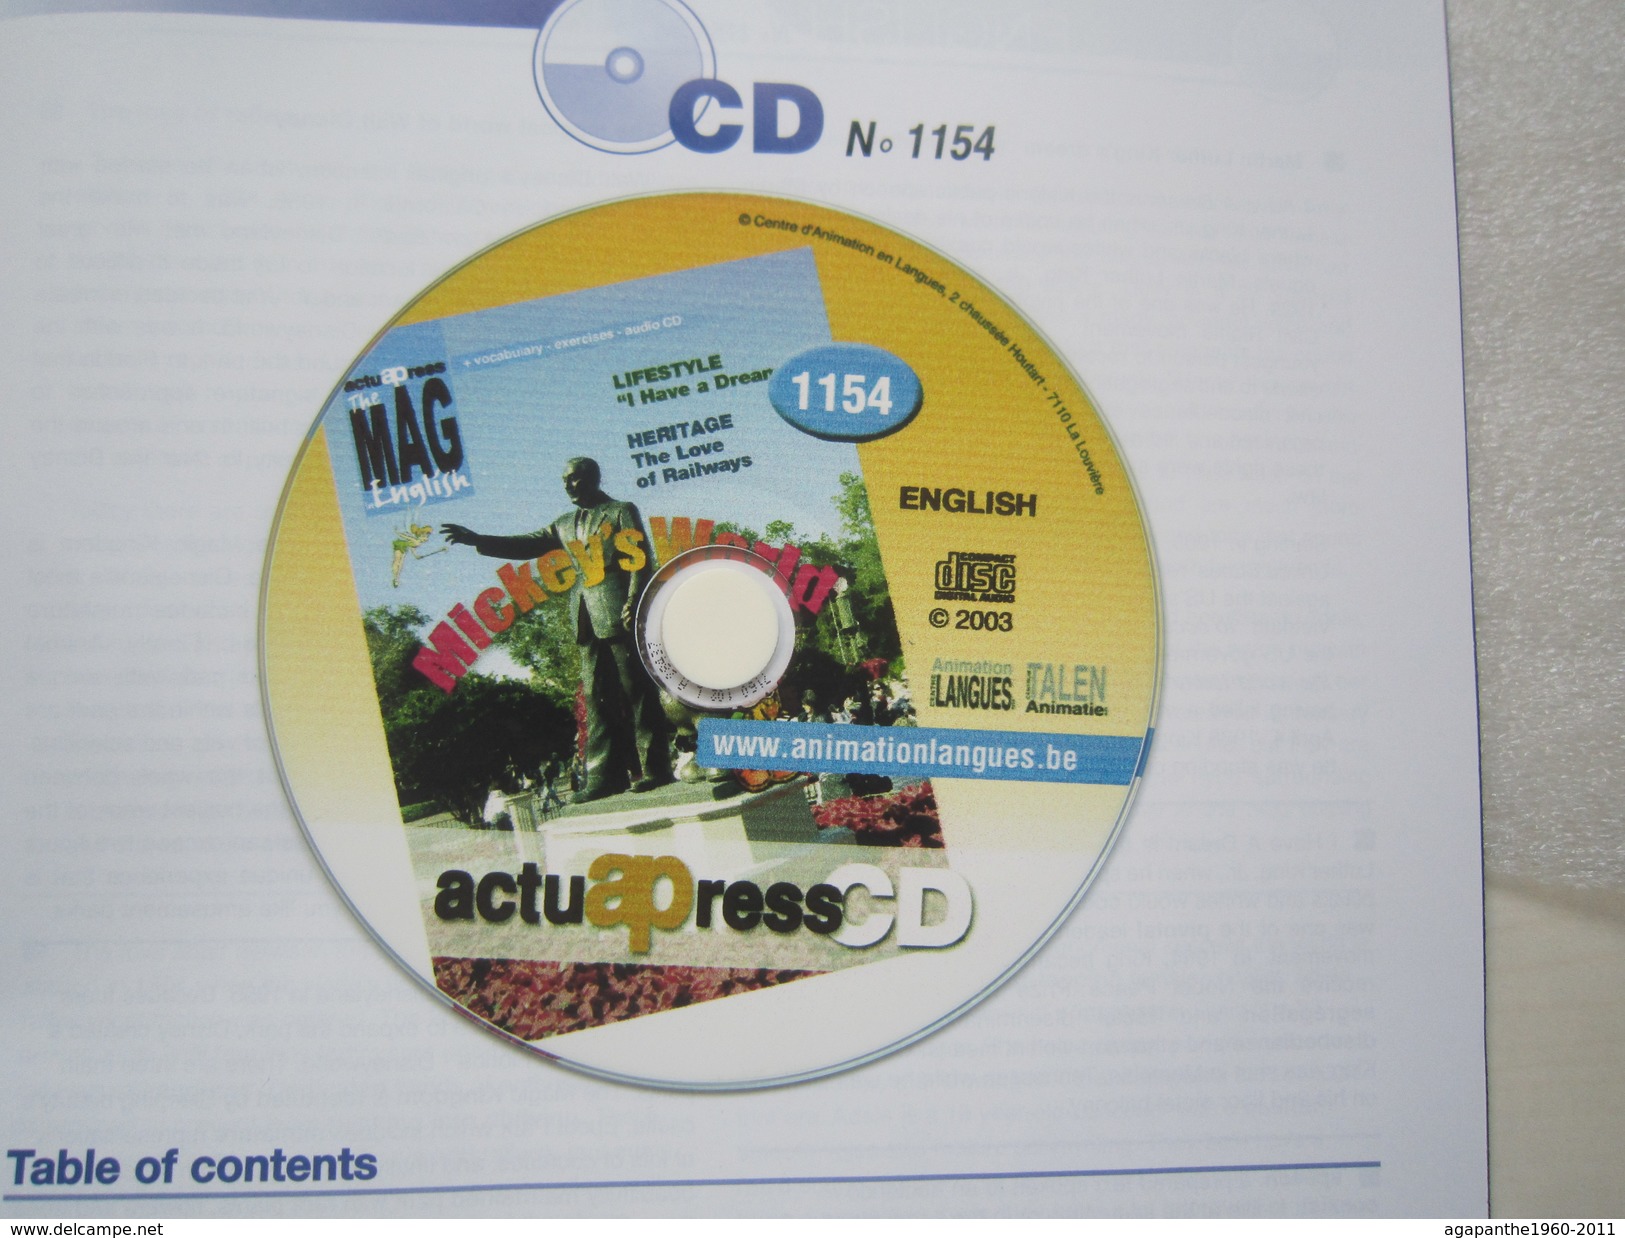 060 - ActuAPress The MAG In ENGLISH  N° 1154 - 2008-05 - MENSUEL  +  CD AUDIO - Opvoeding/Onderwijs